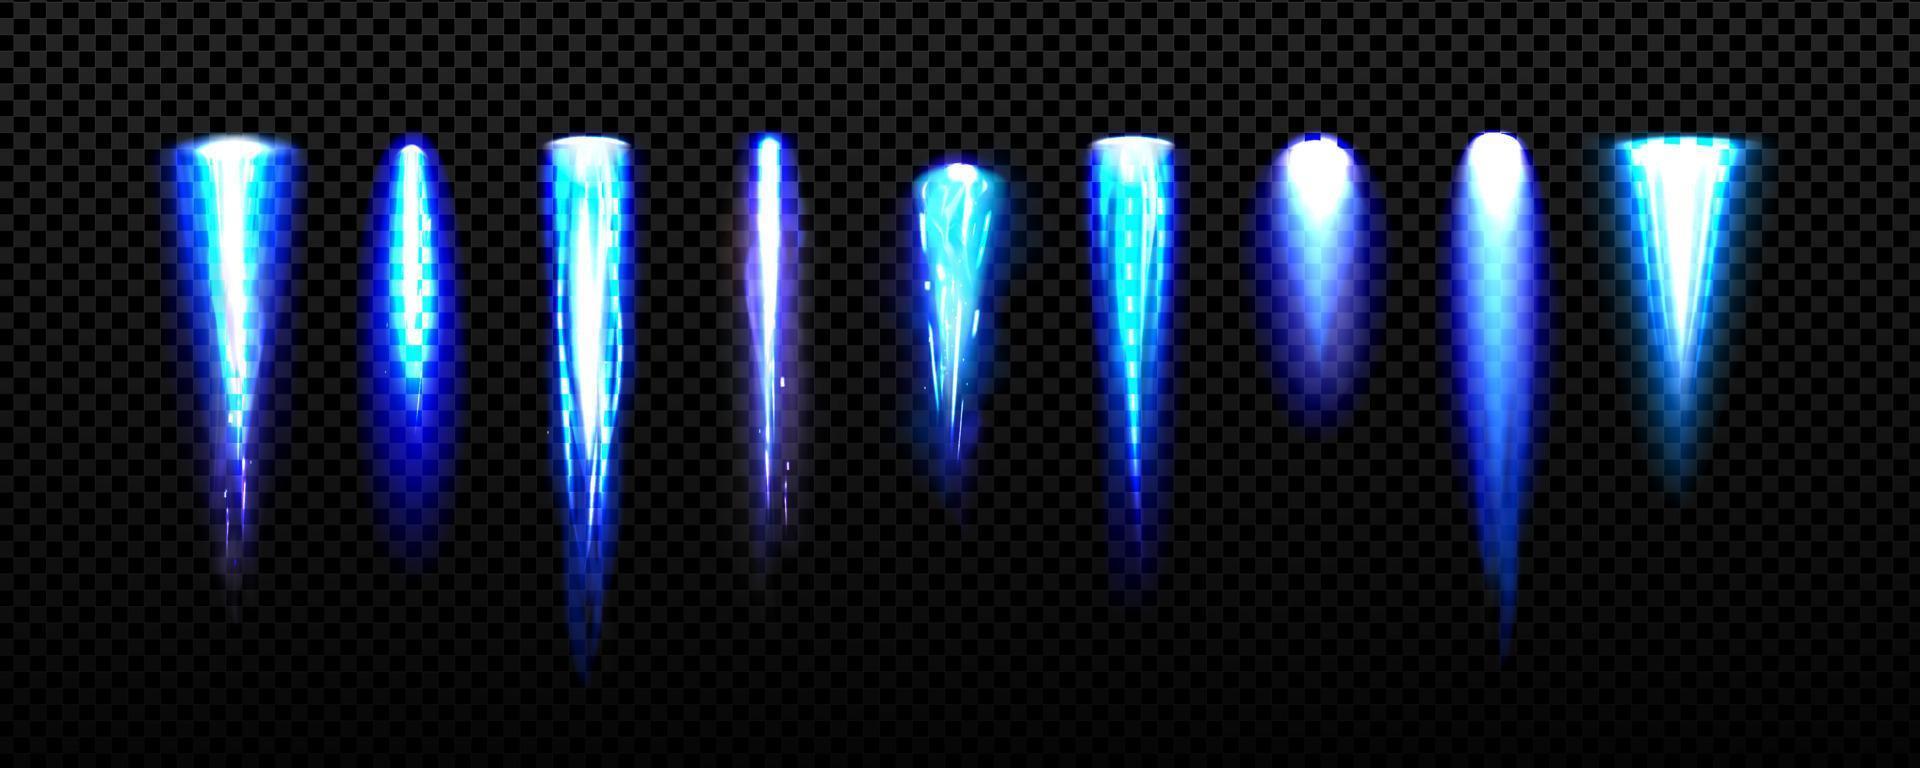 Jetpack light, blue fire flames of space rocket vector